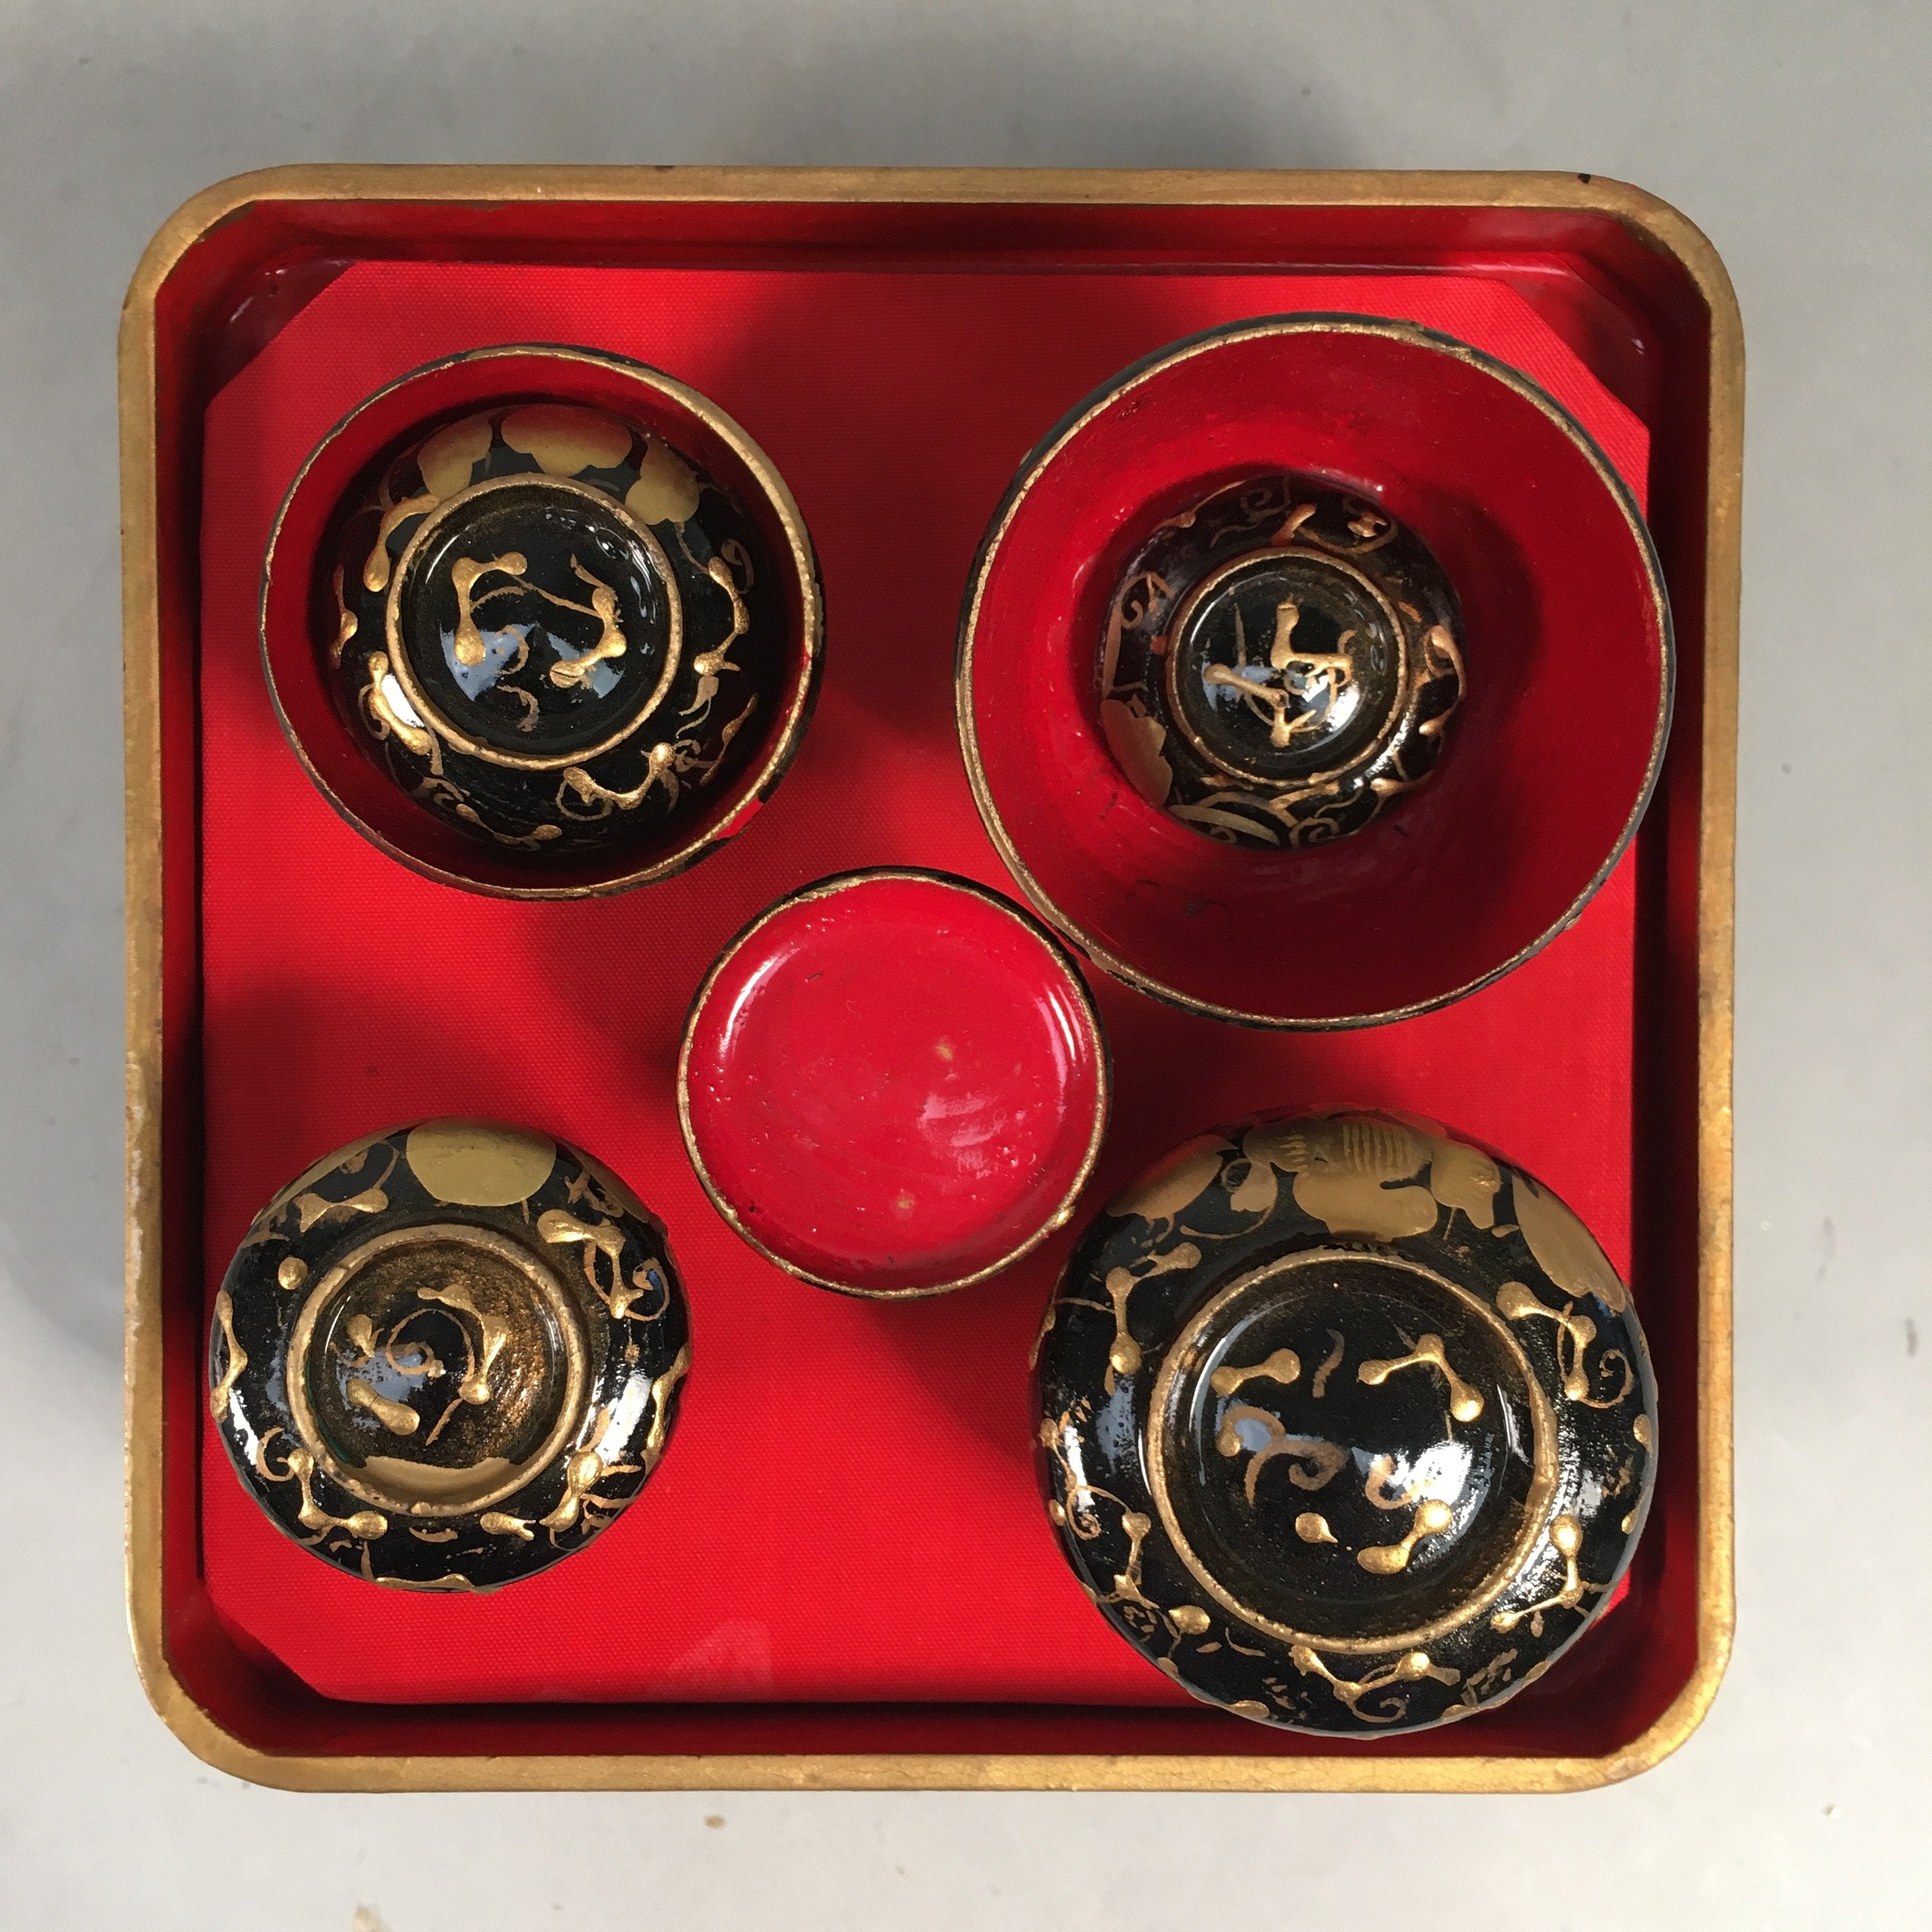 Japanese Hina Doll Tray Bowl Set Vtg Lacquer Gold Makie Wood Miniature ID352